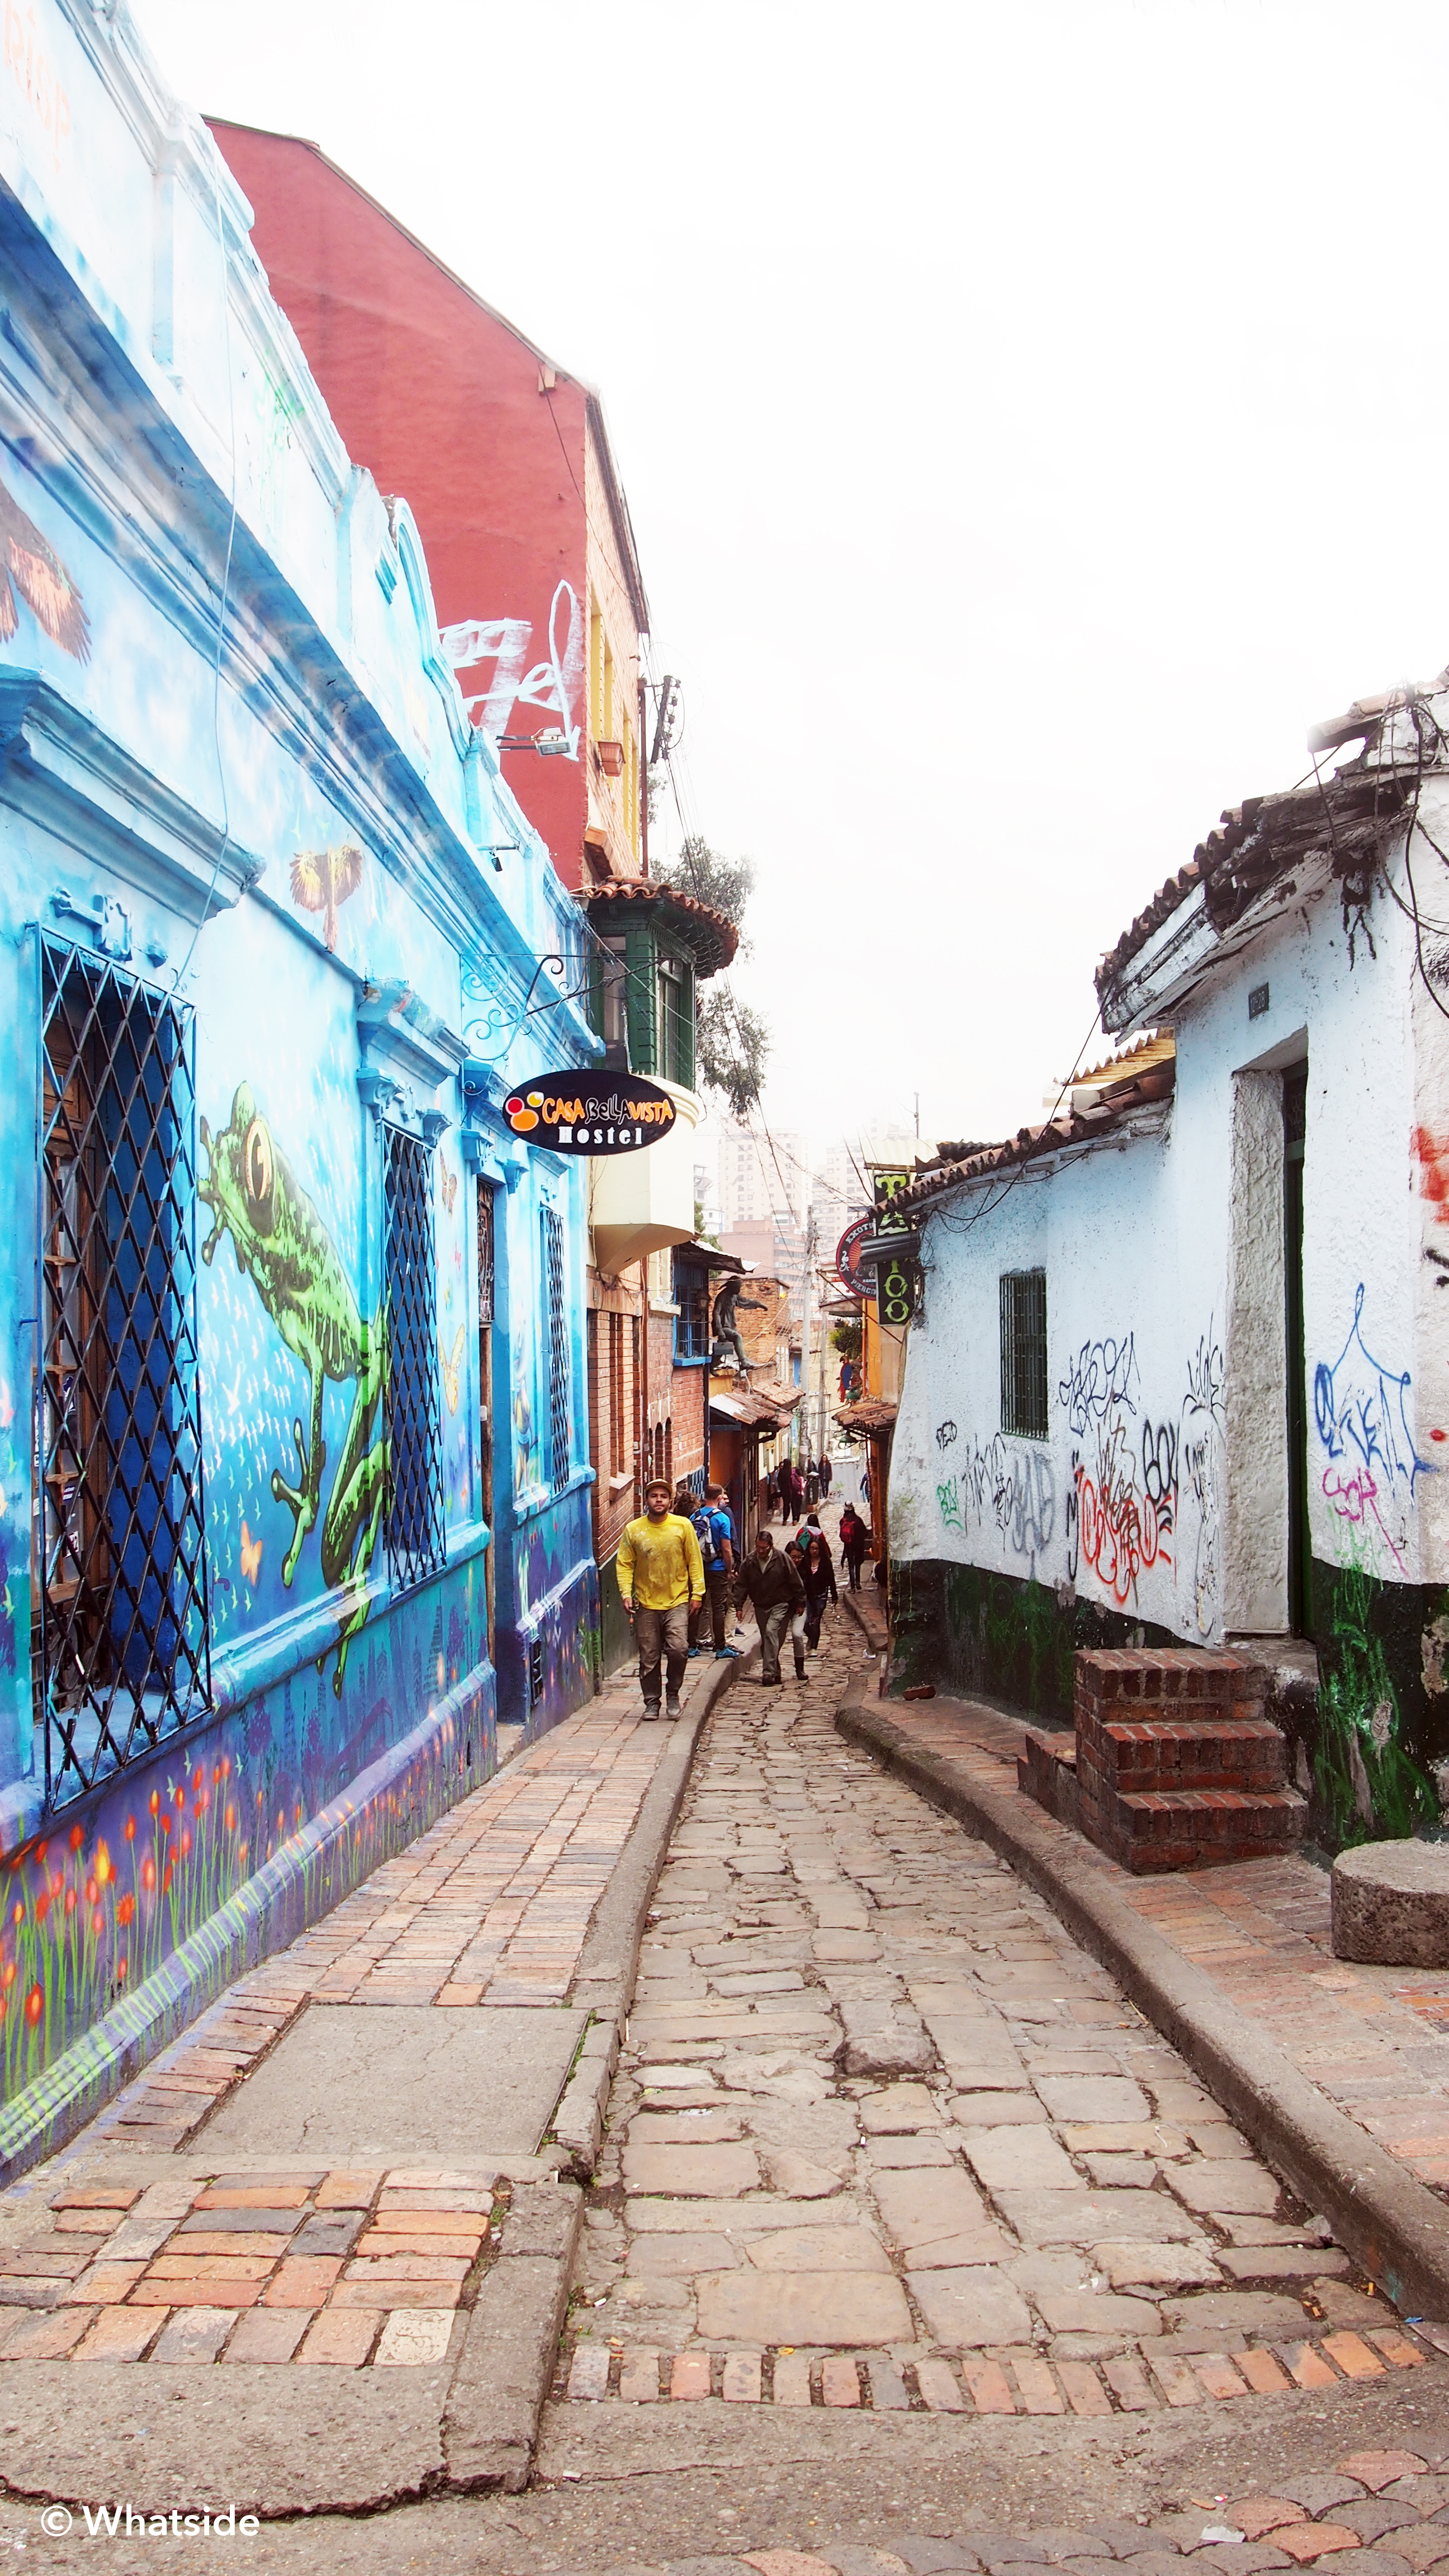 Les graffitis de Bogota